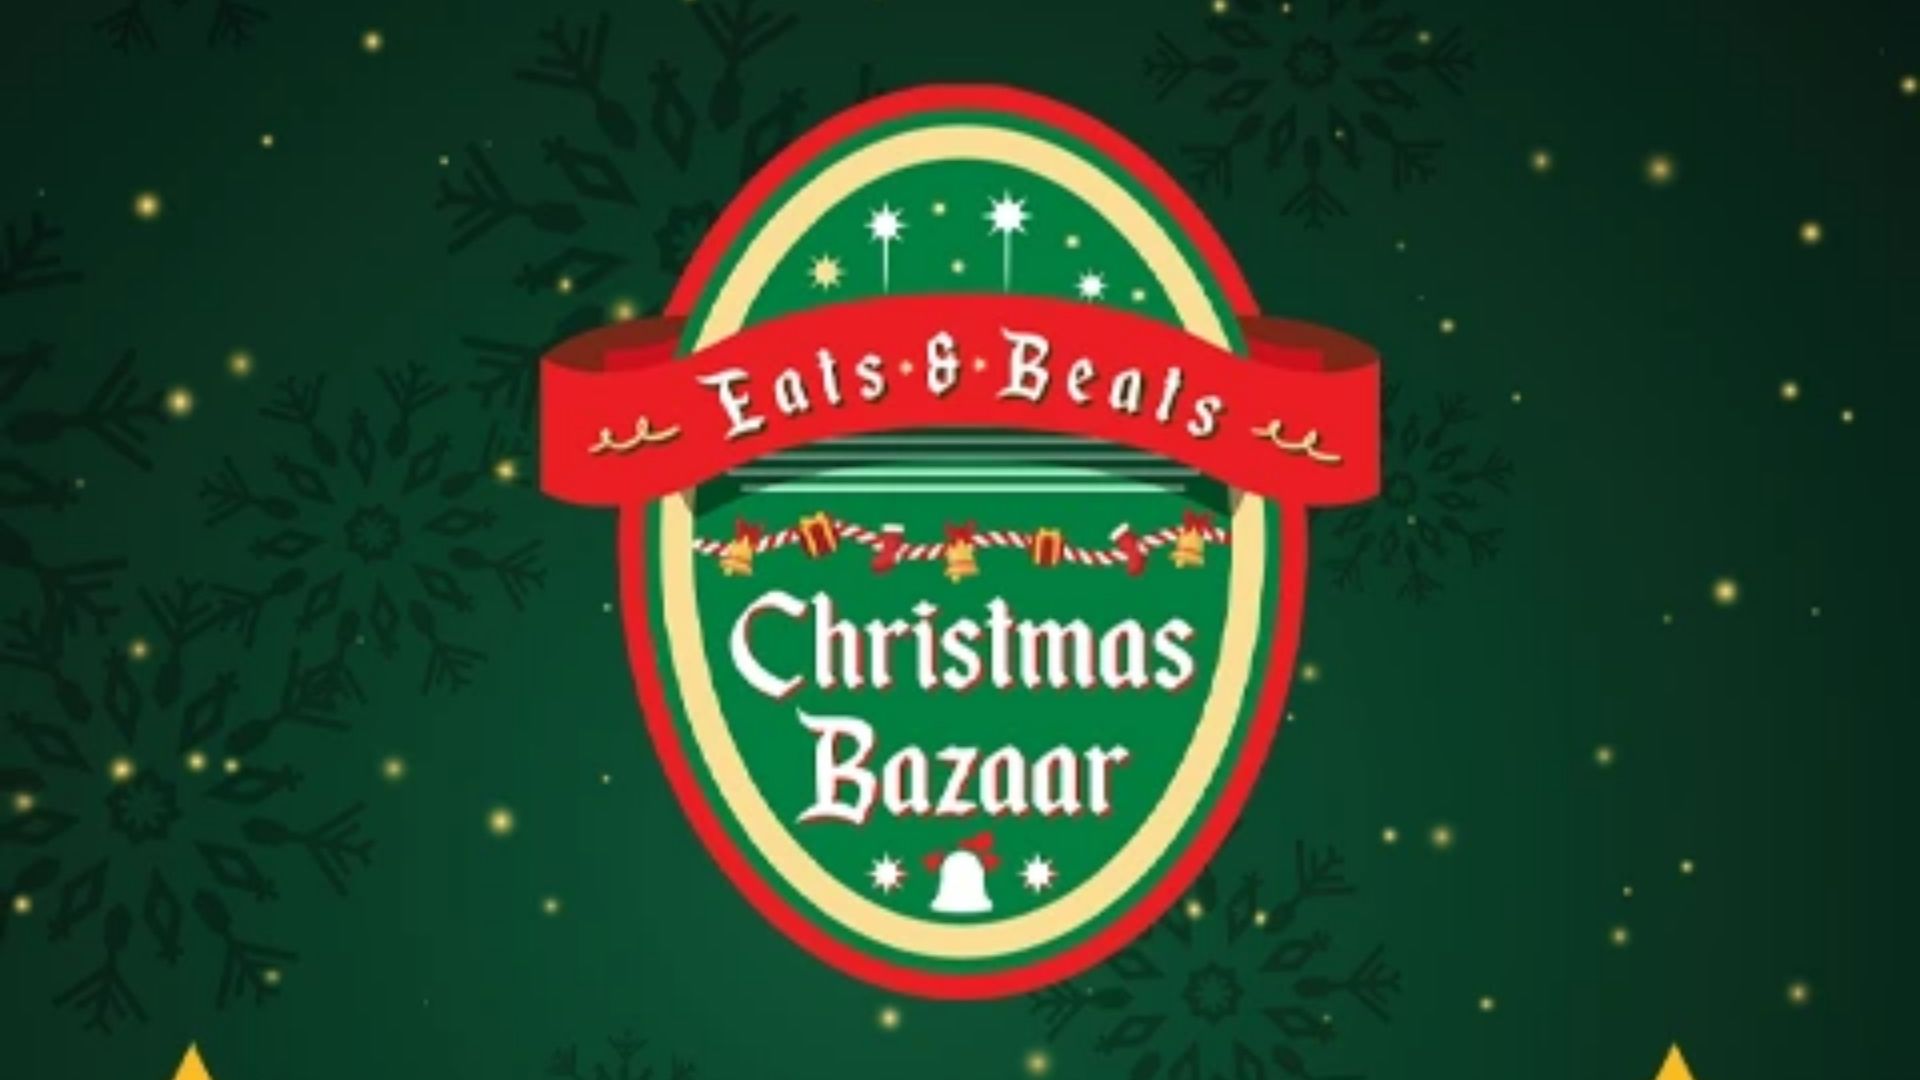 İzmir Eats and Beats Christmas Bazaar